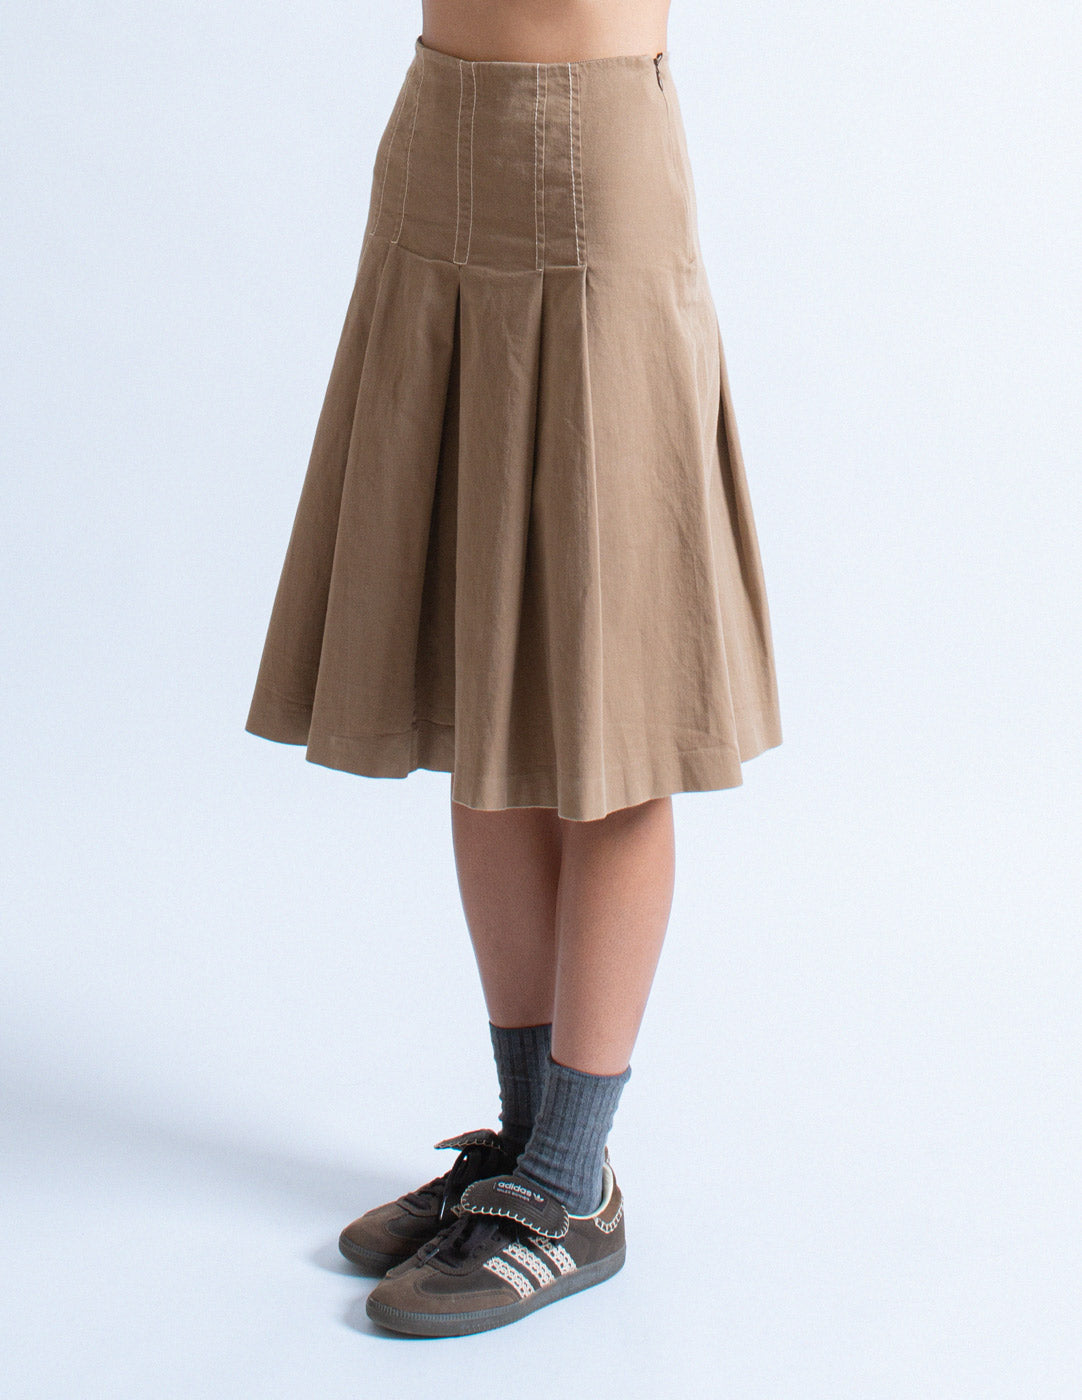 Prada khaki pleated cotton skirt side detail